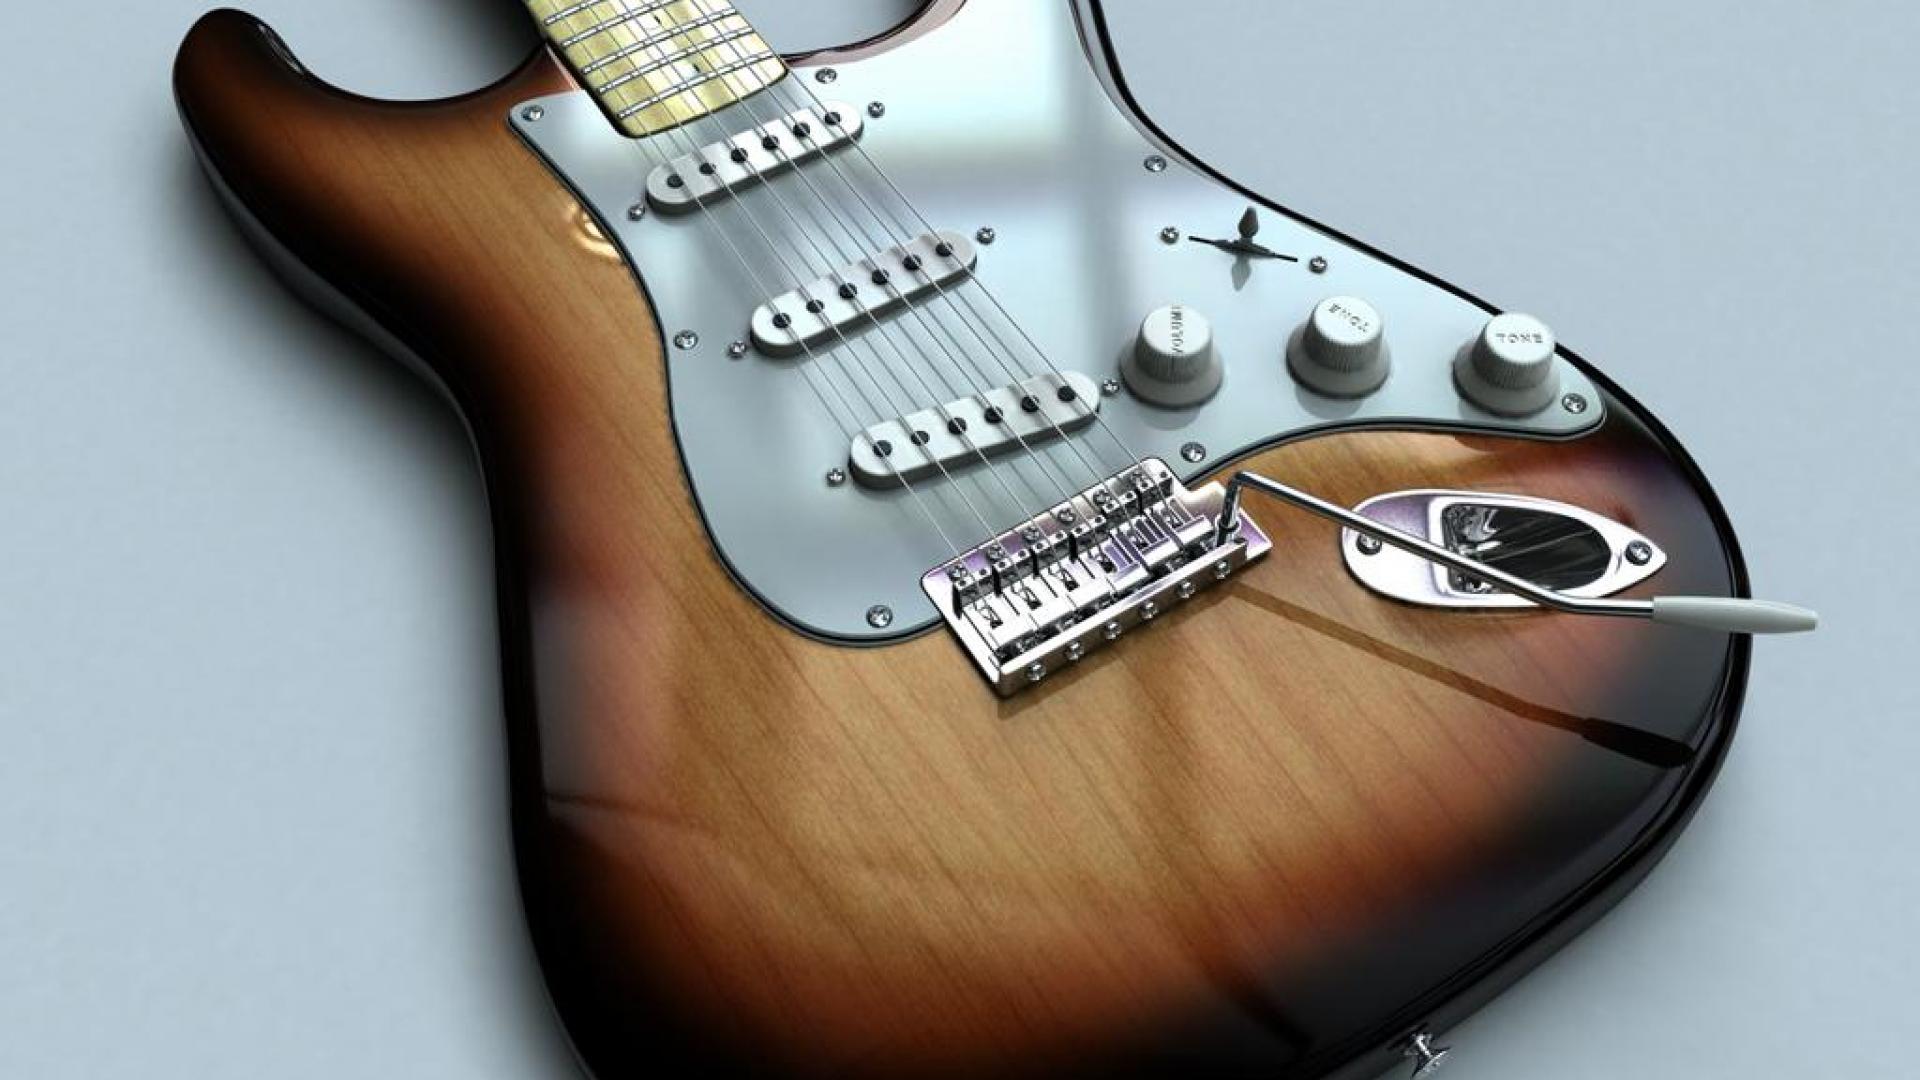 Fender Stratocaster Wallpaper HD. Image